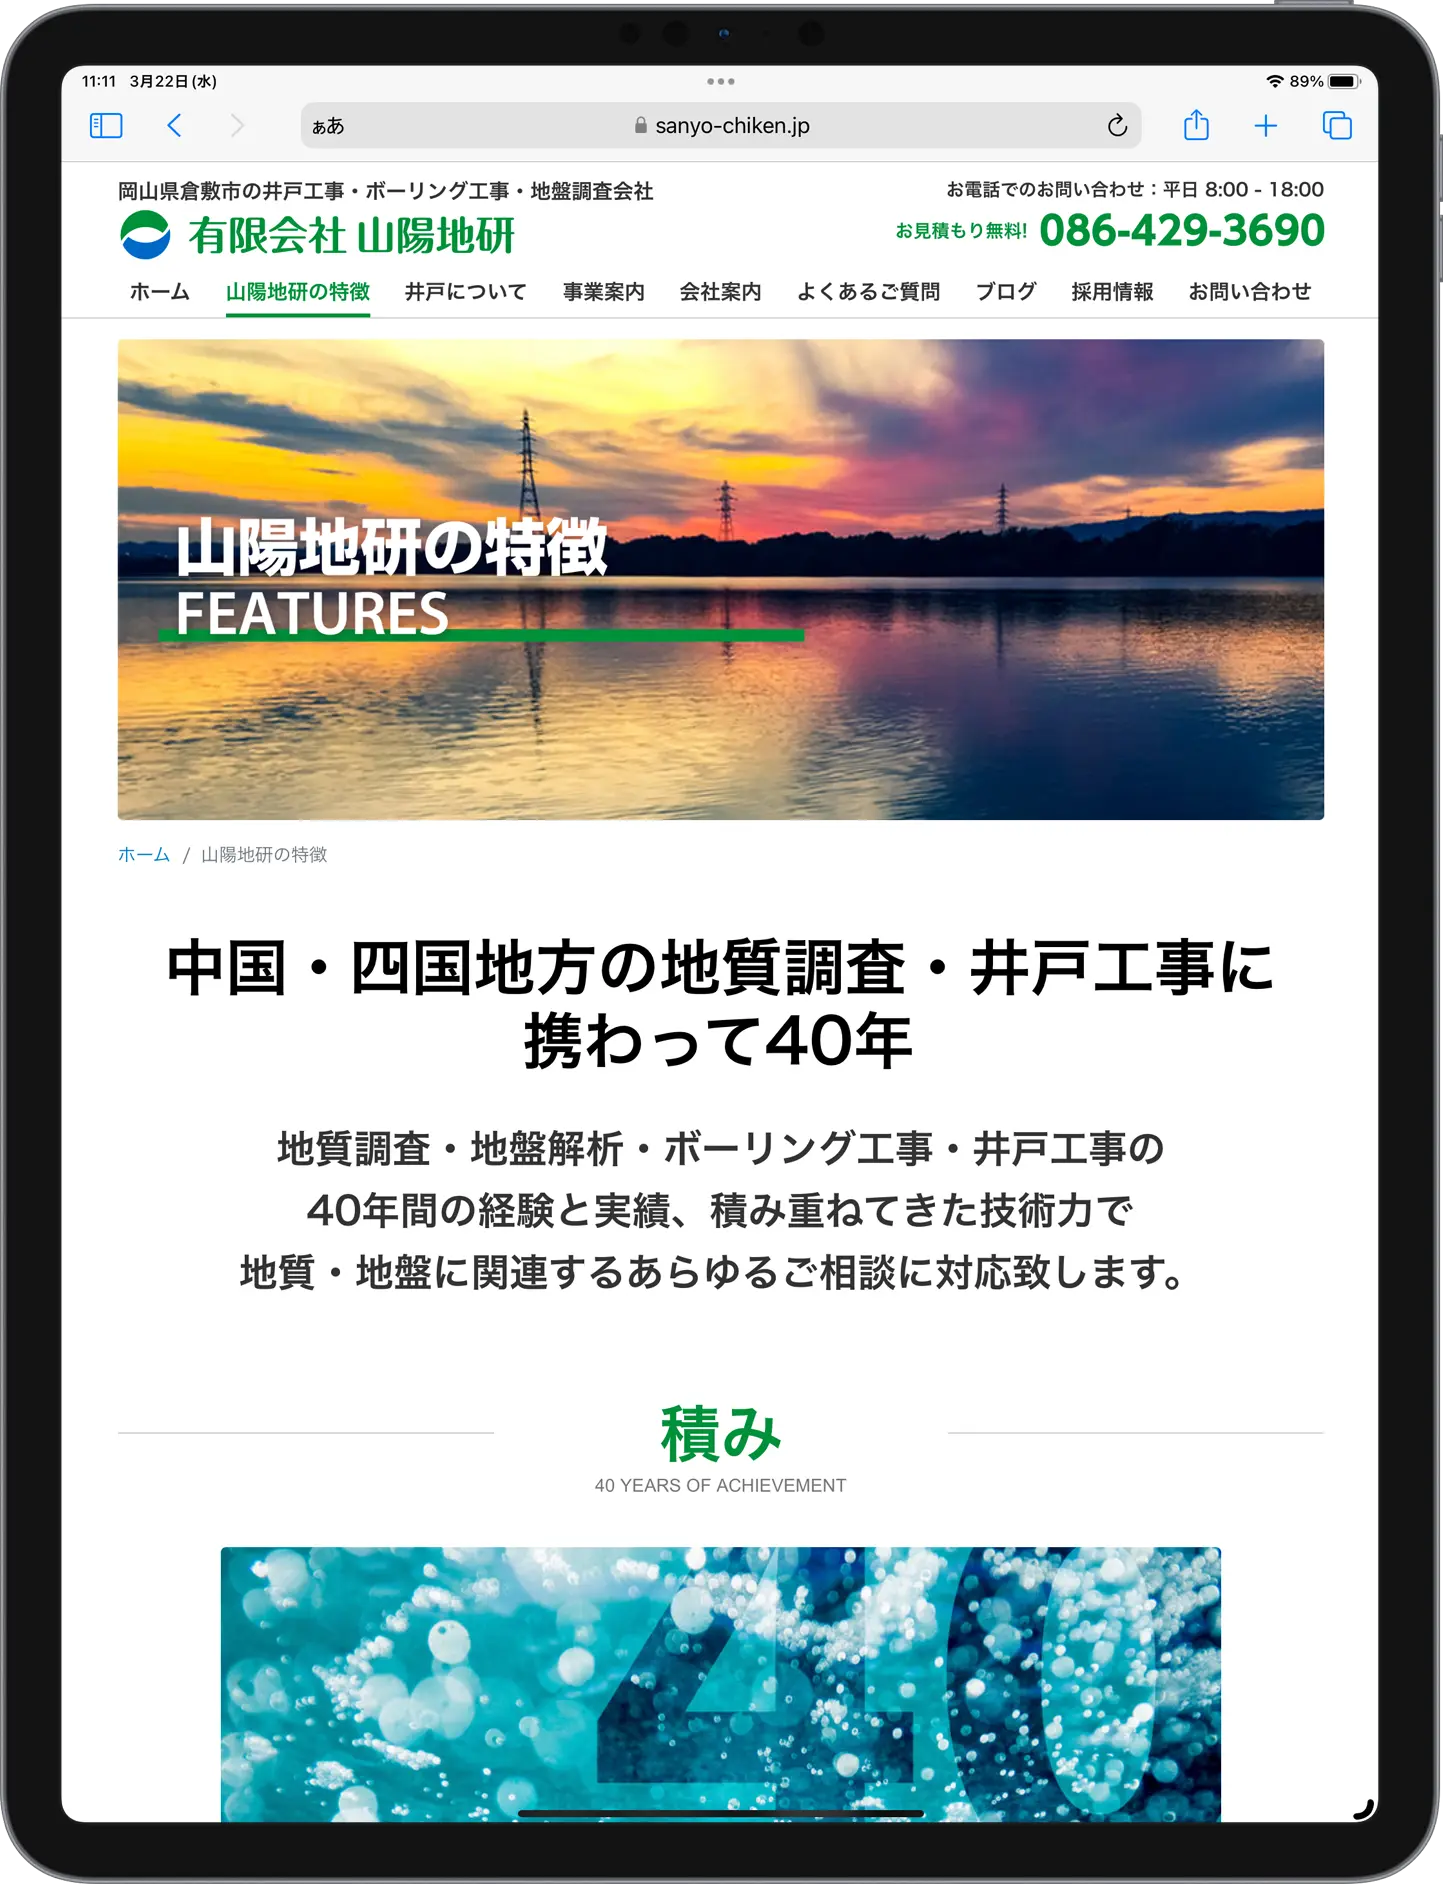 Sanyo Chiken - A Well Construction Company in Kurashiki, Okayama - Website Tablet View 02